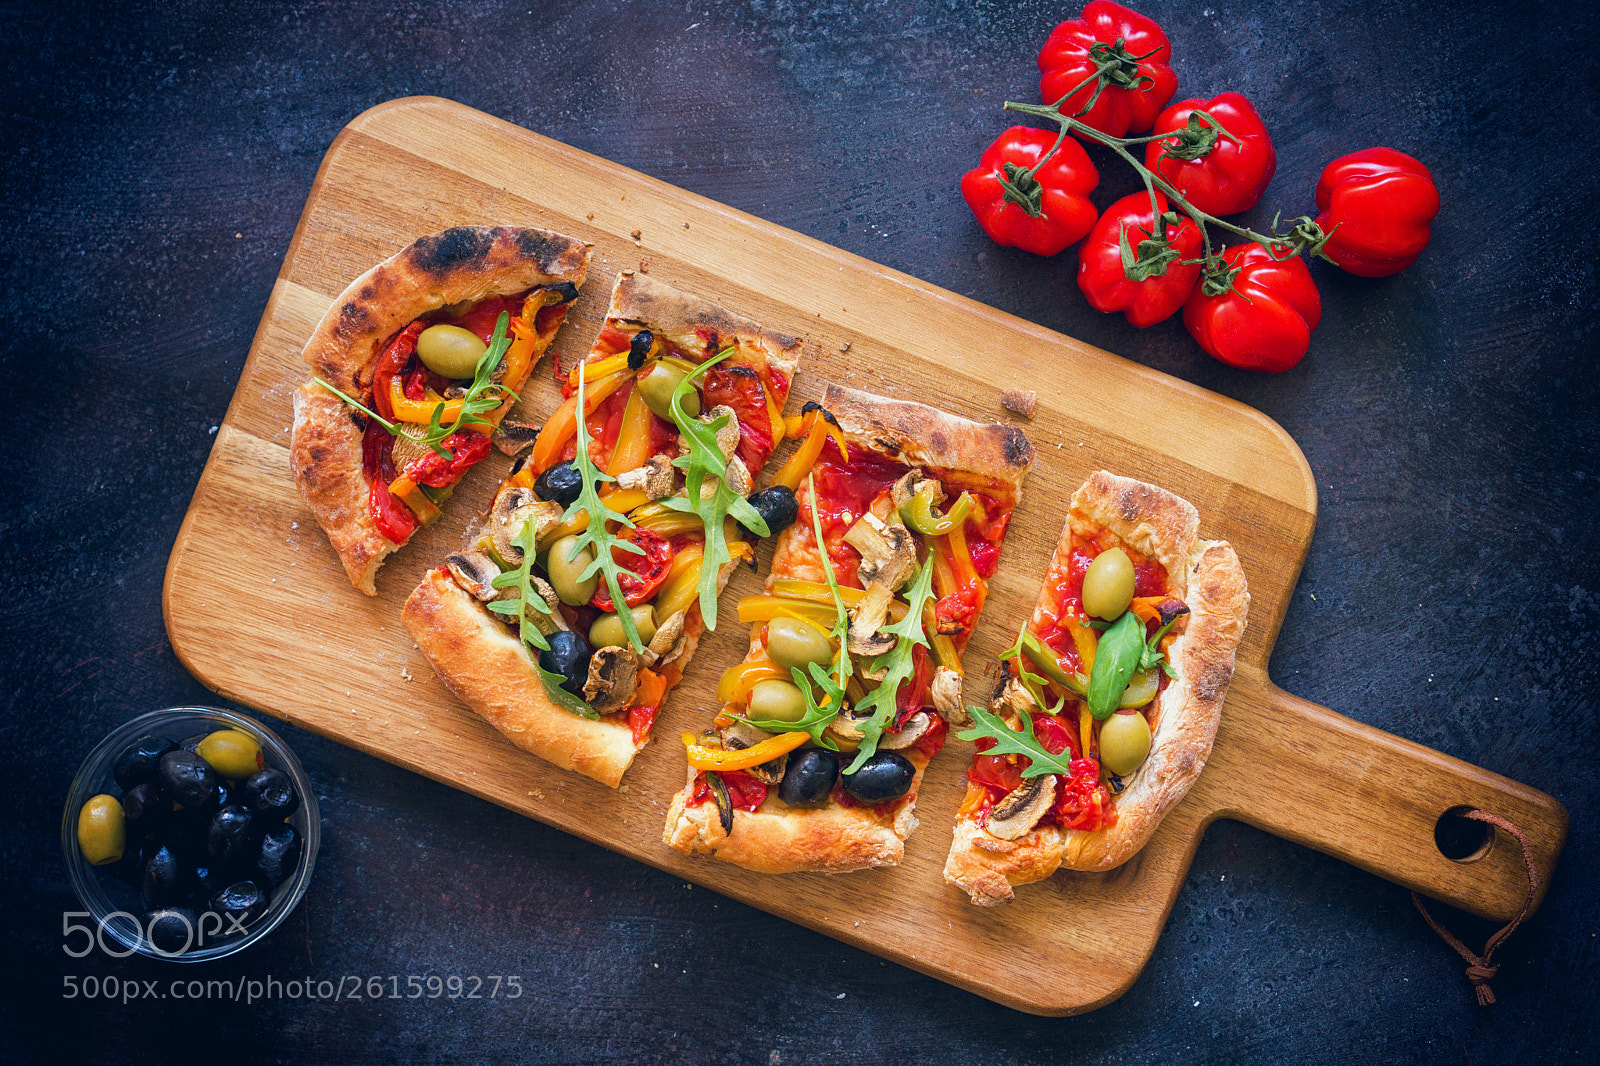 Sony a6300 sample photo. Vegetarian pizza photography